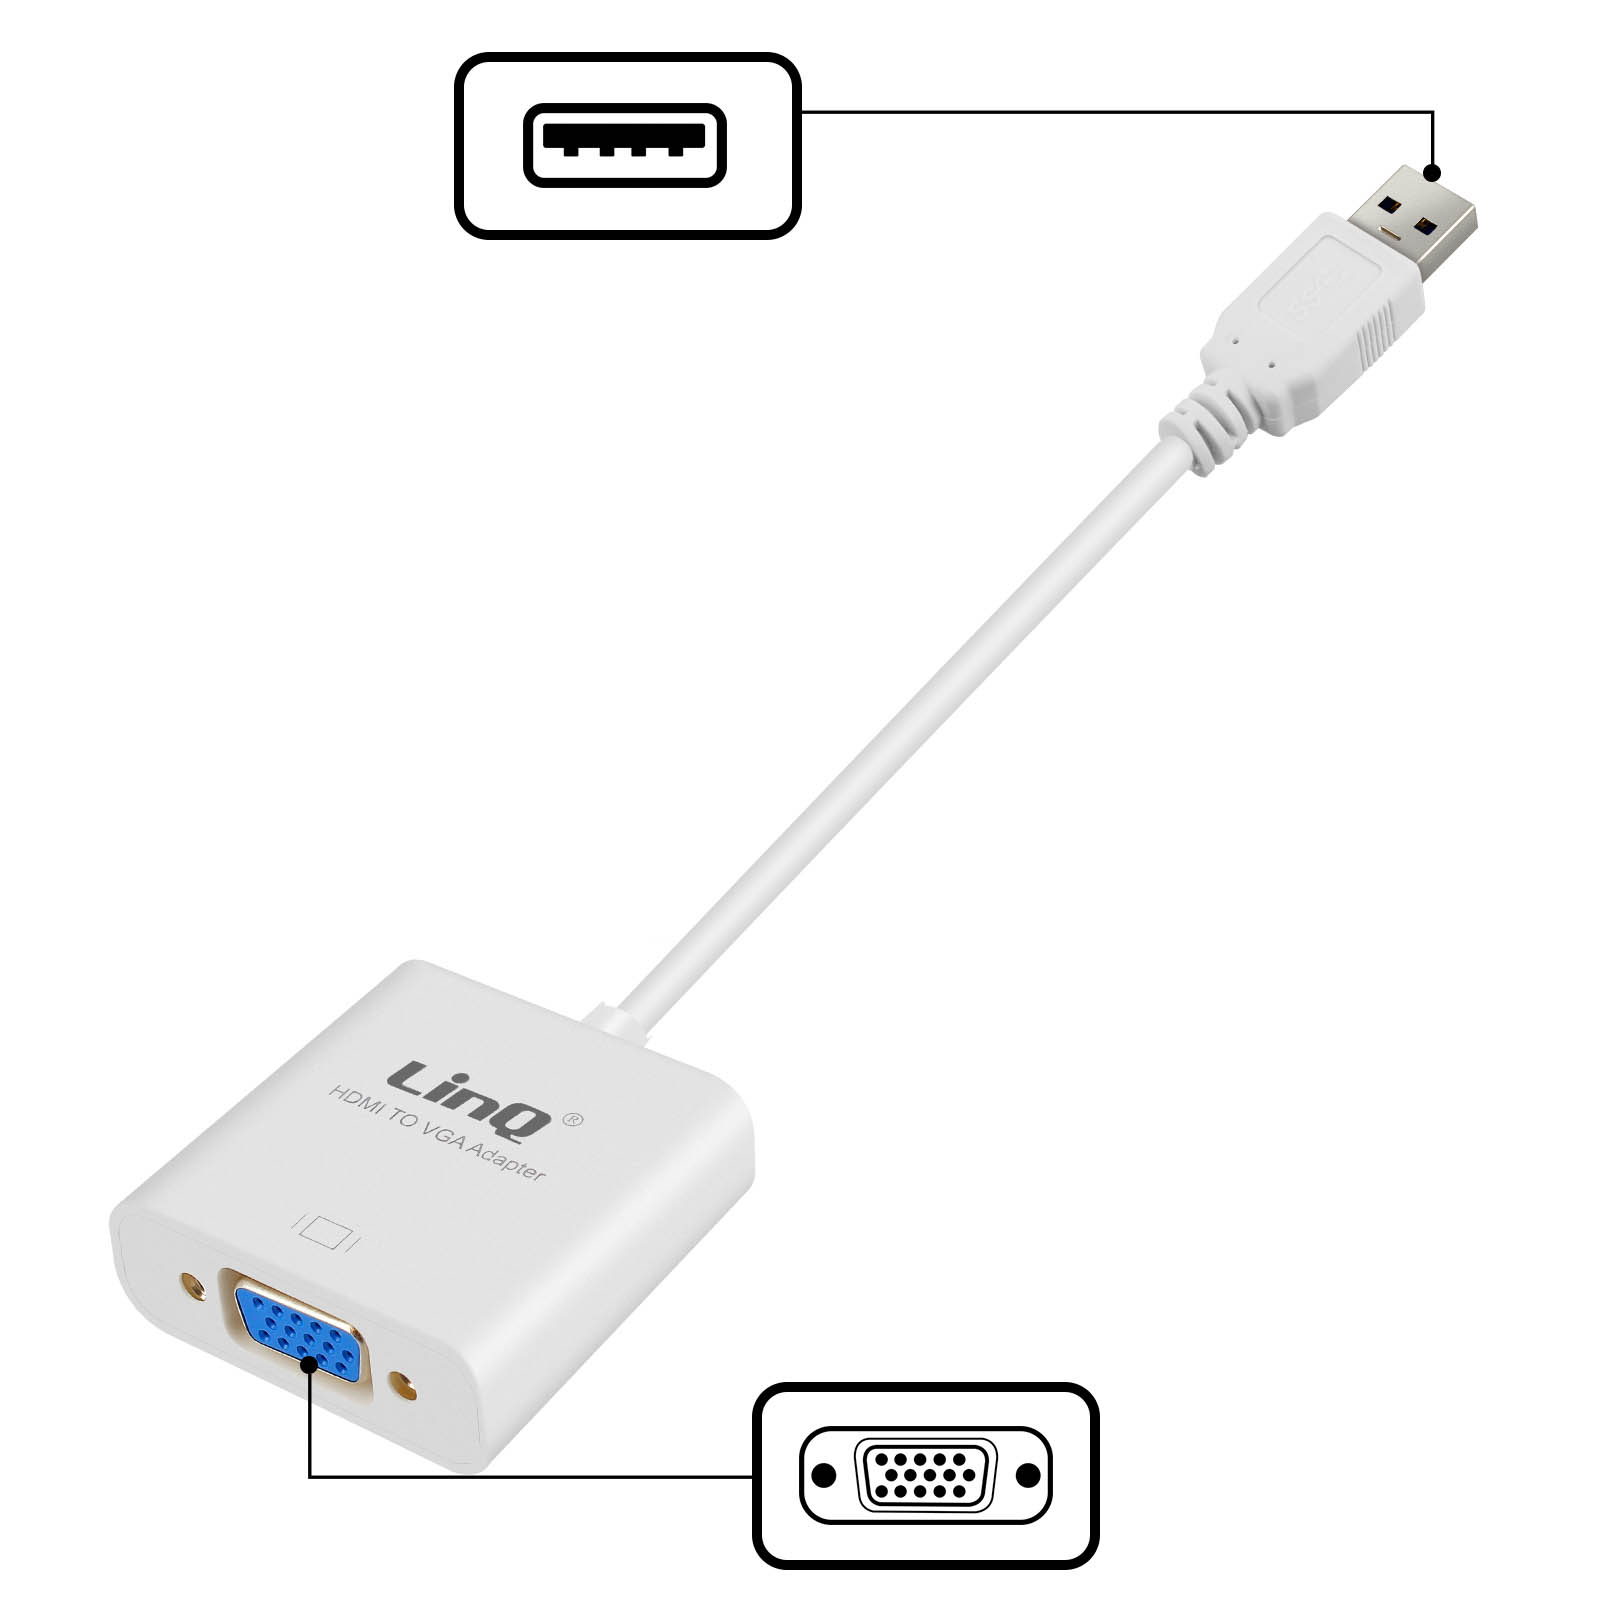 Câble/Adaptateur USB 3.0 Mâle vers VGA Femelle, by LinQ - Blanc